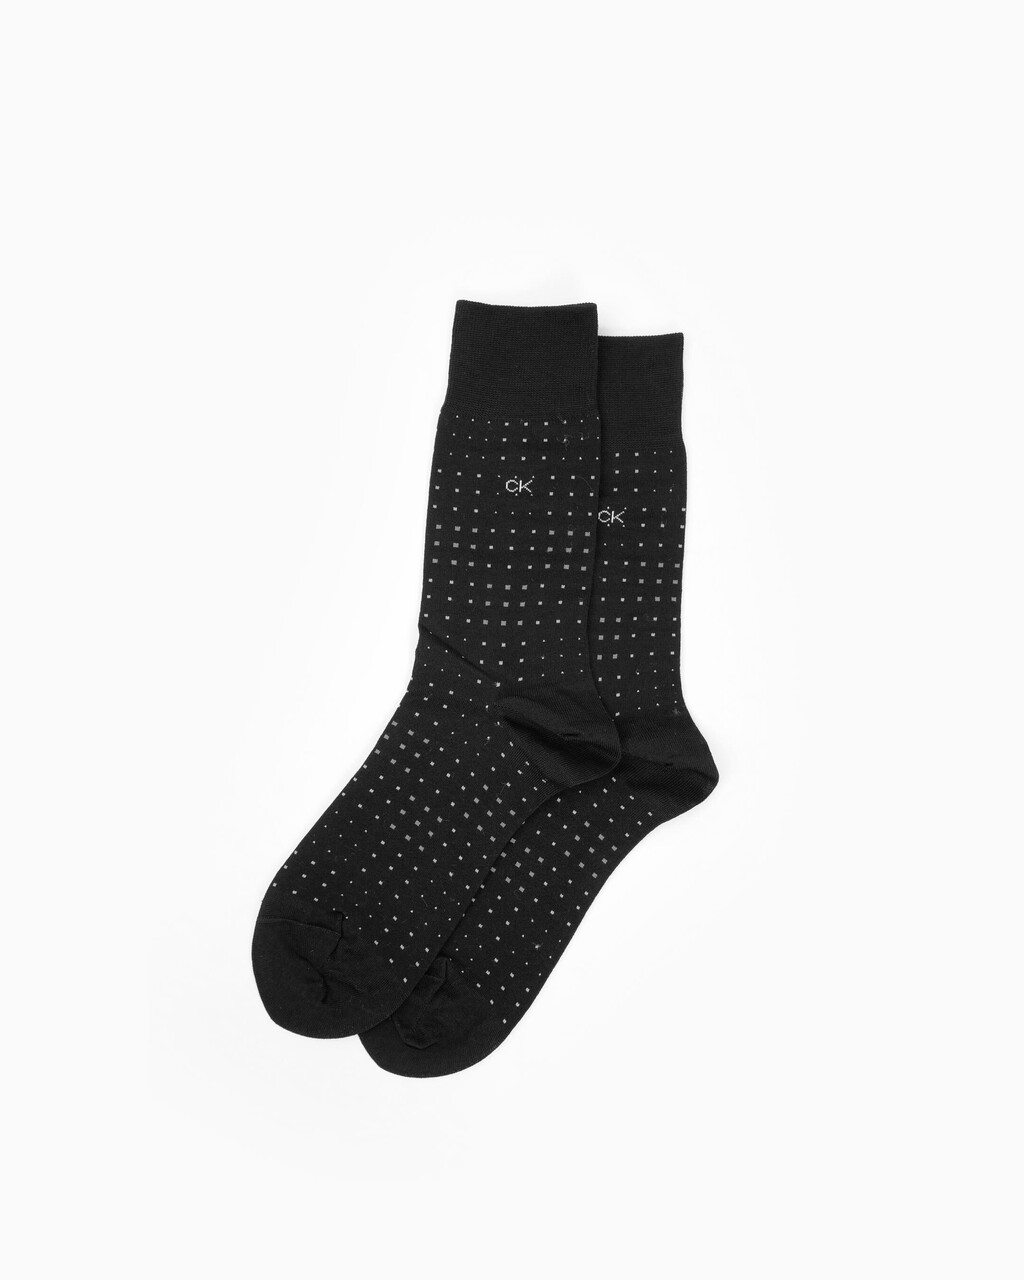 Men's 1 Pack Dots Cotton Crew Socks, BLACK, hi-res